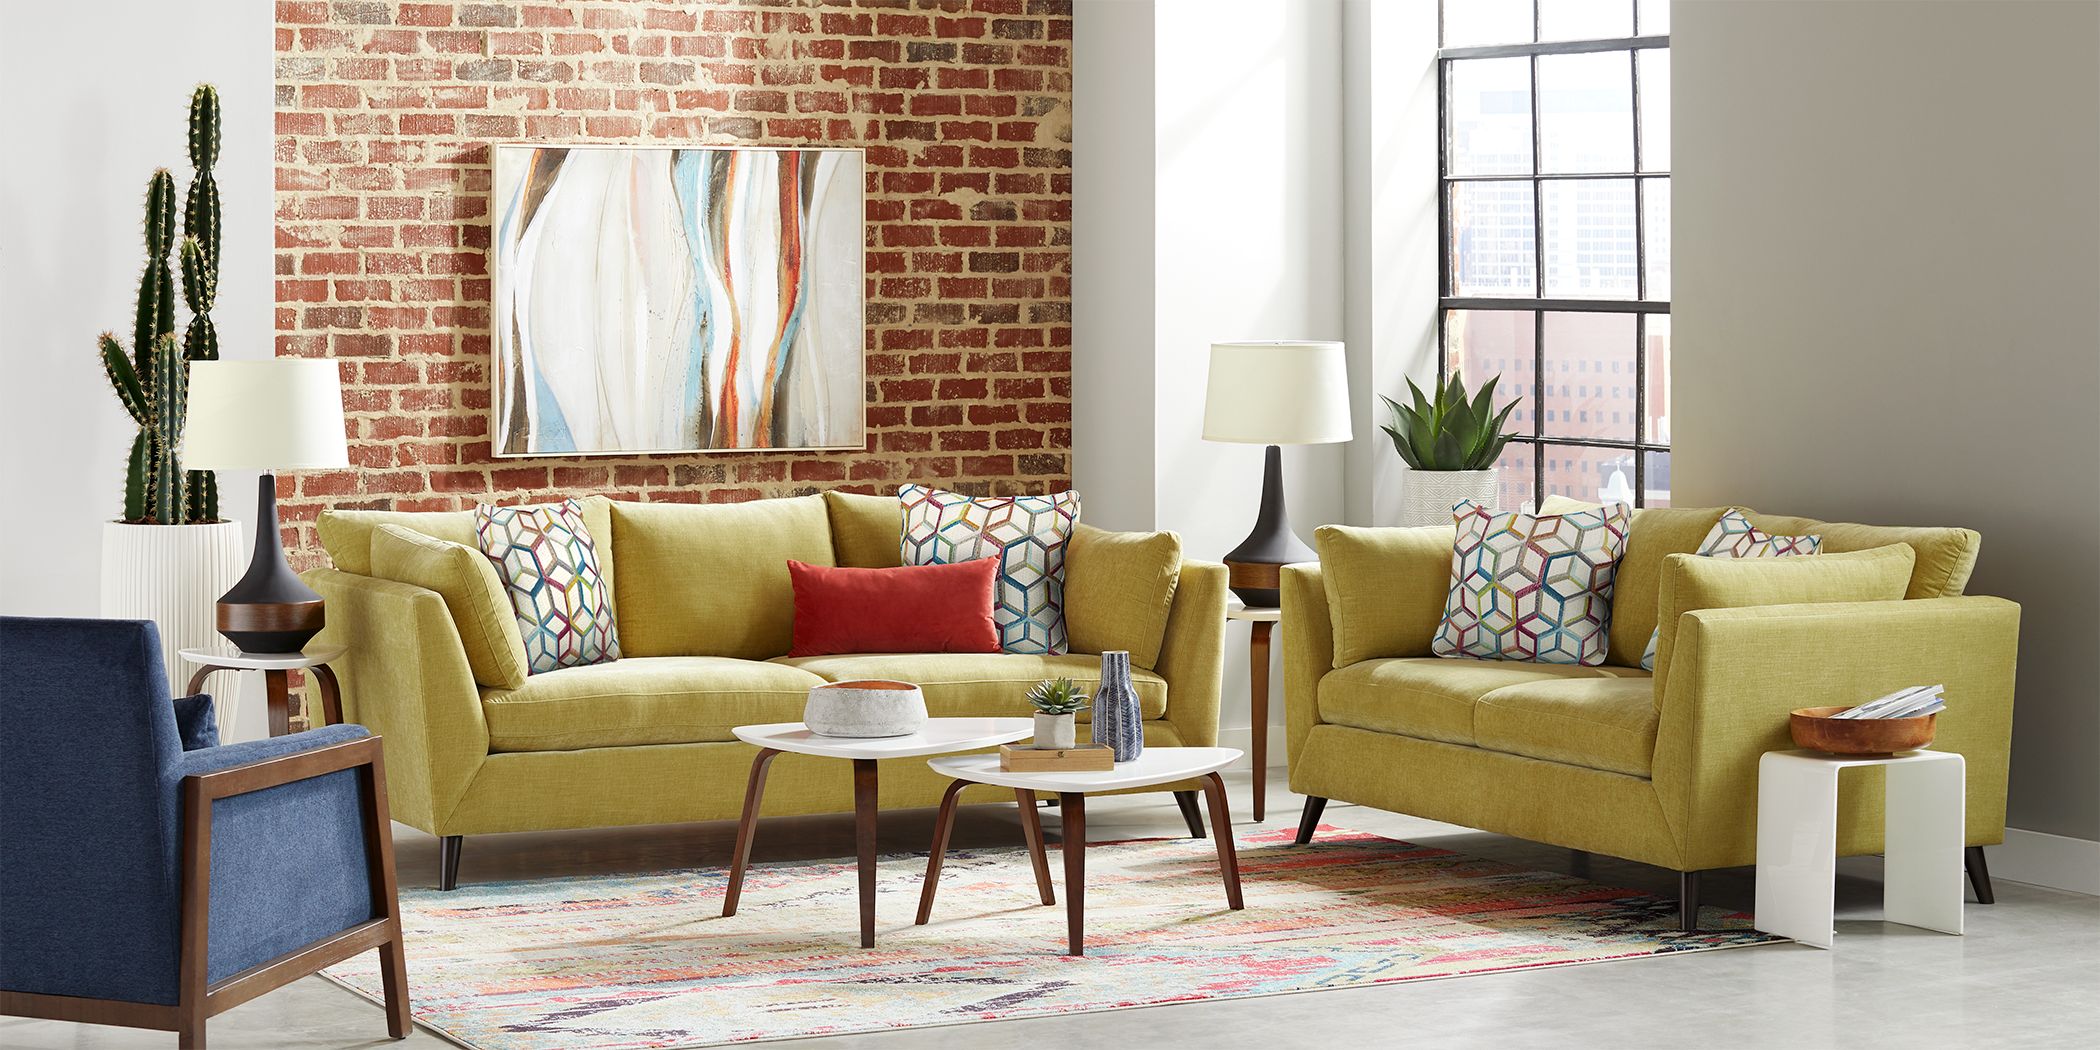 6 Piece Living Room Sofa Sets Of Furniture